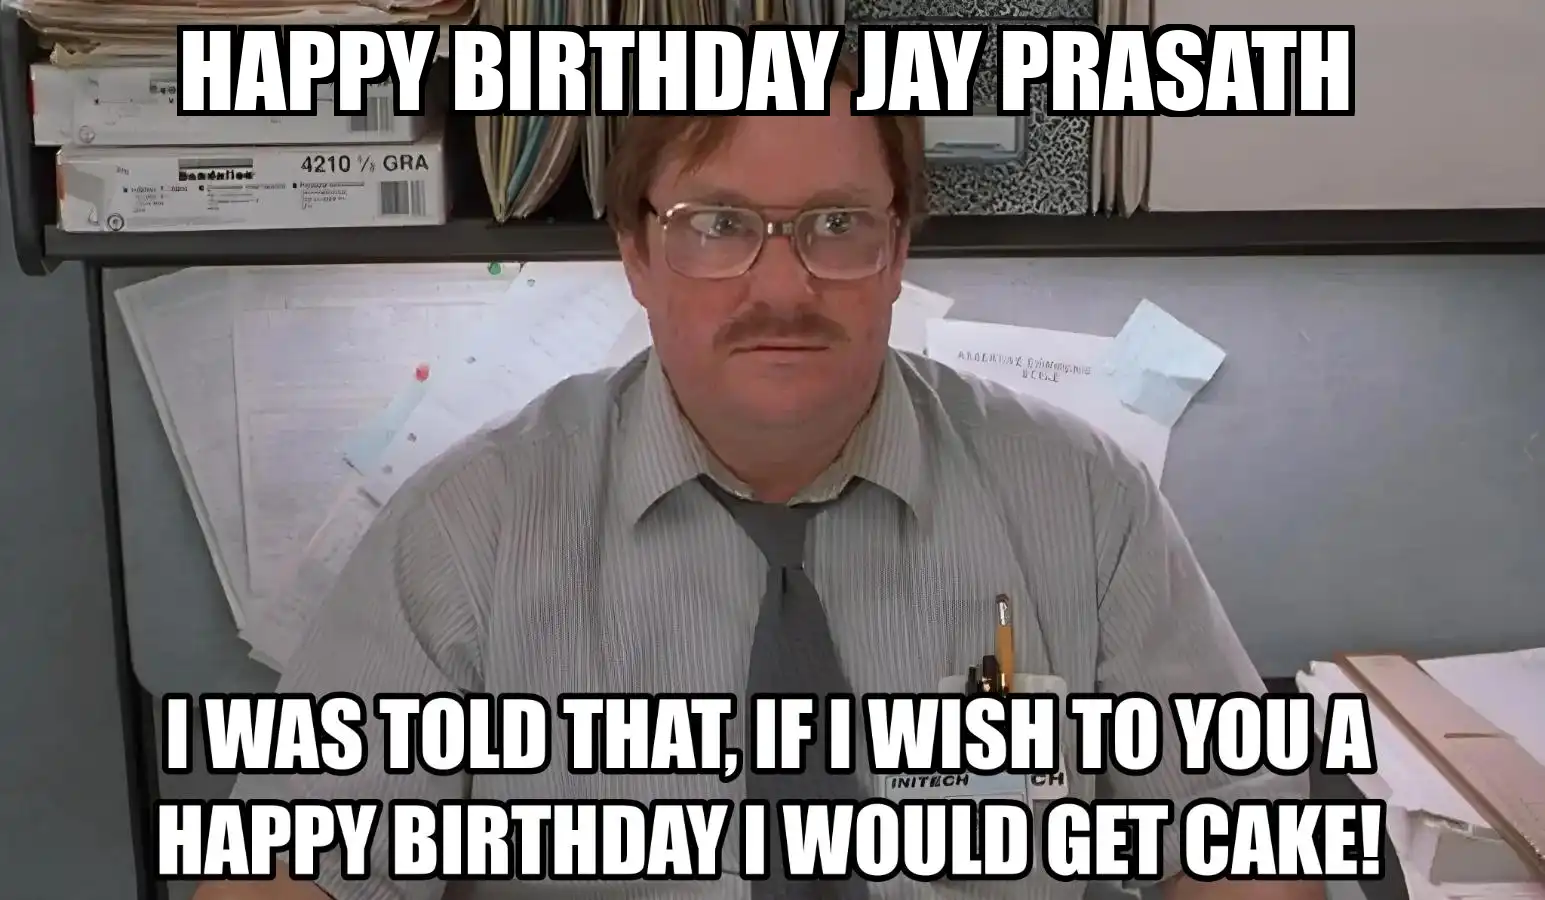 Happy Birthday Jay prasath I Would Get A Cake Meme